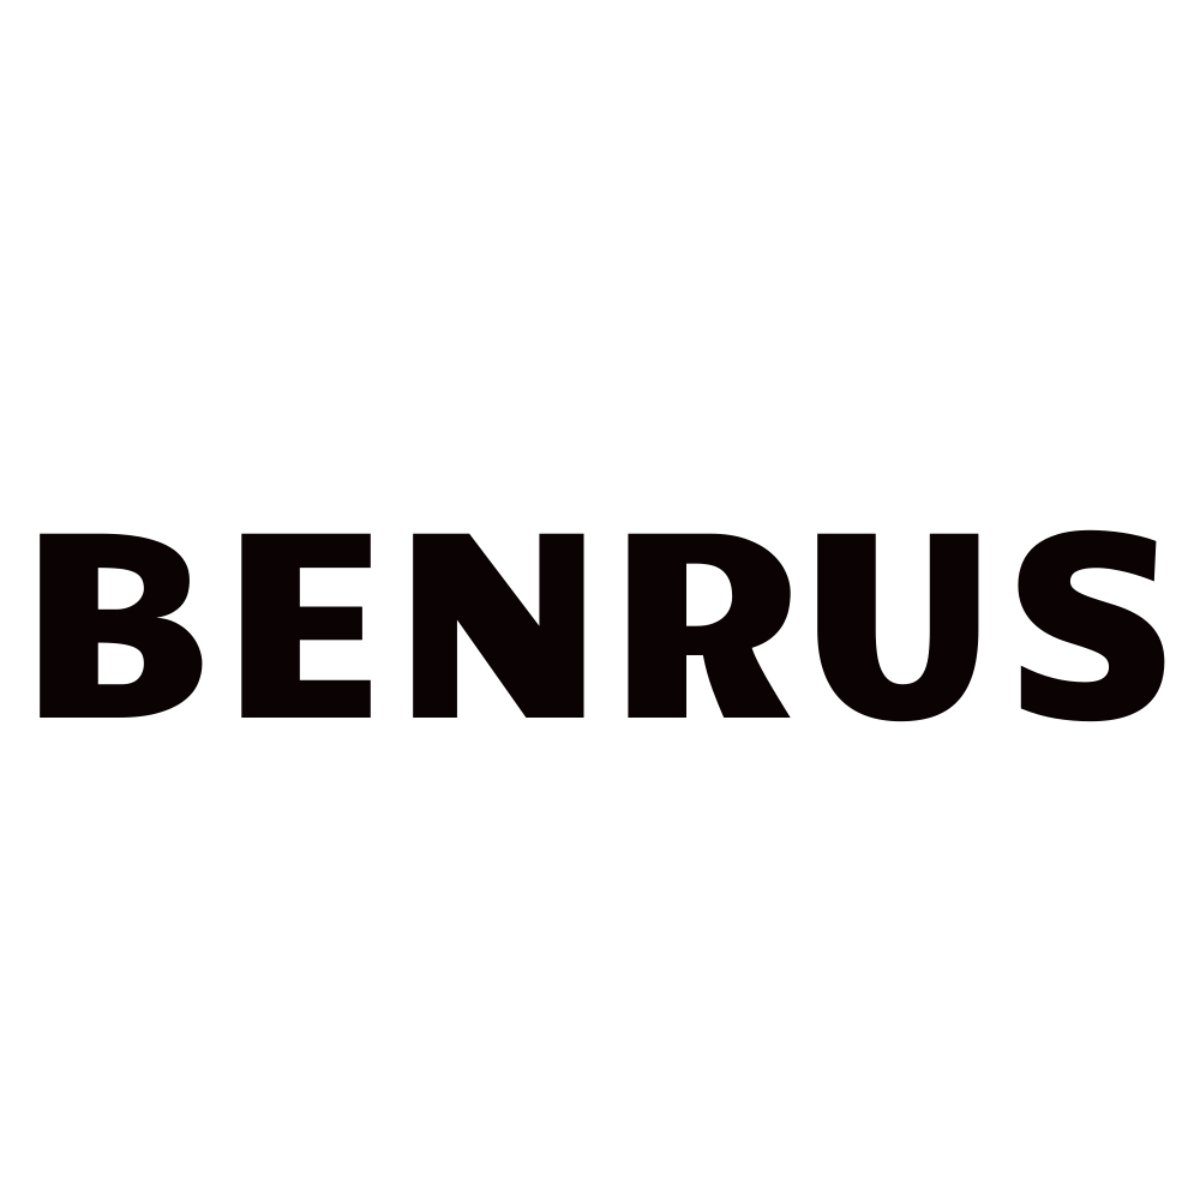 1940 - 1950 Benrus Watch Trademark